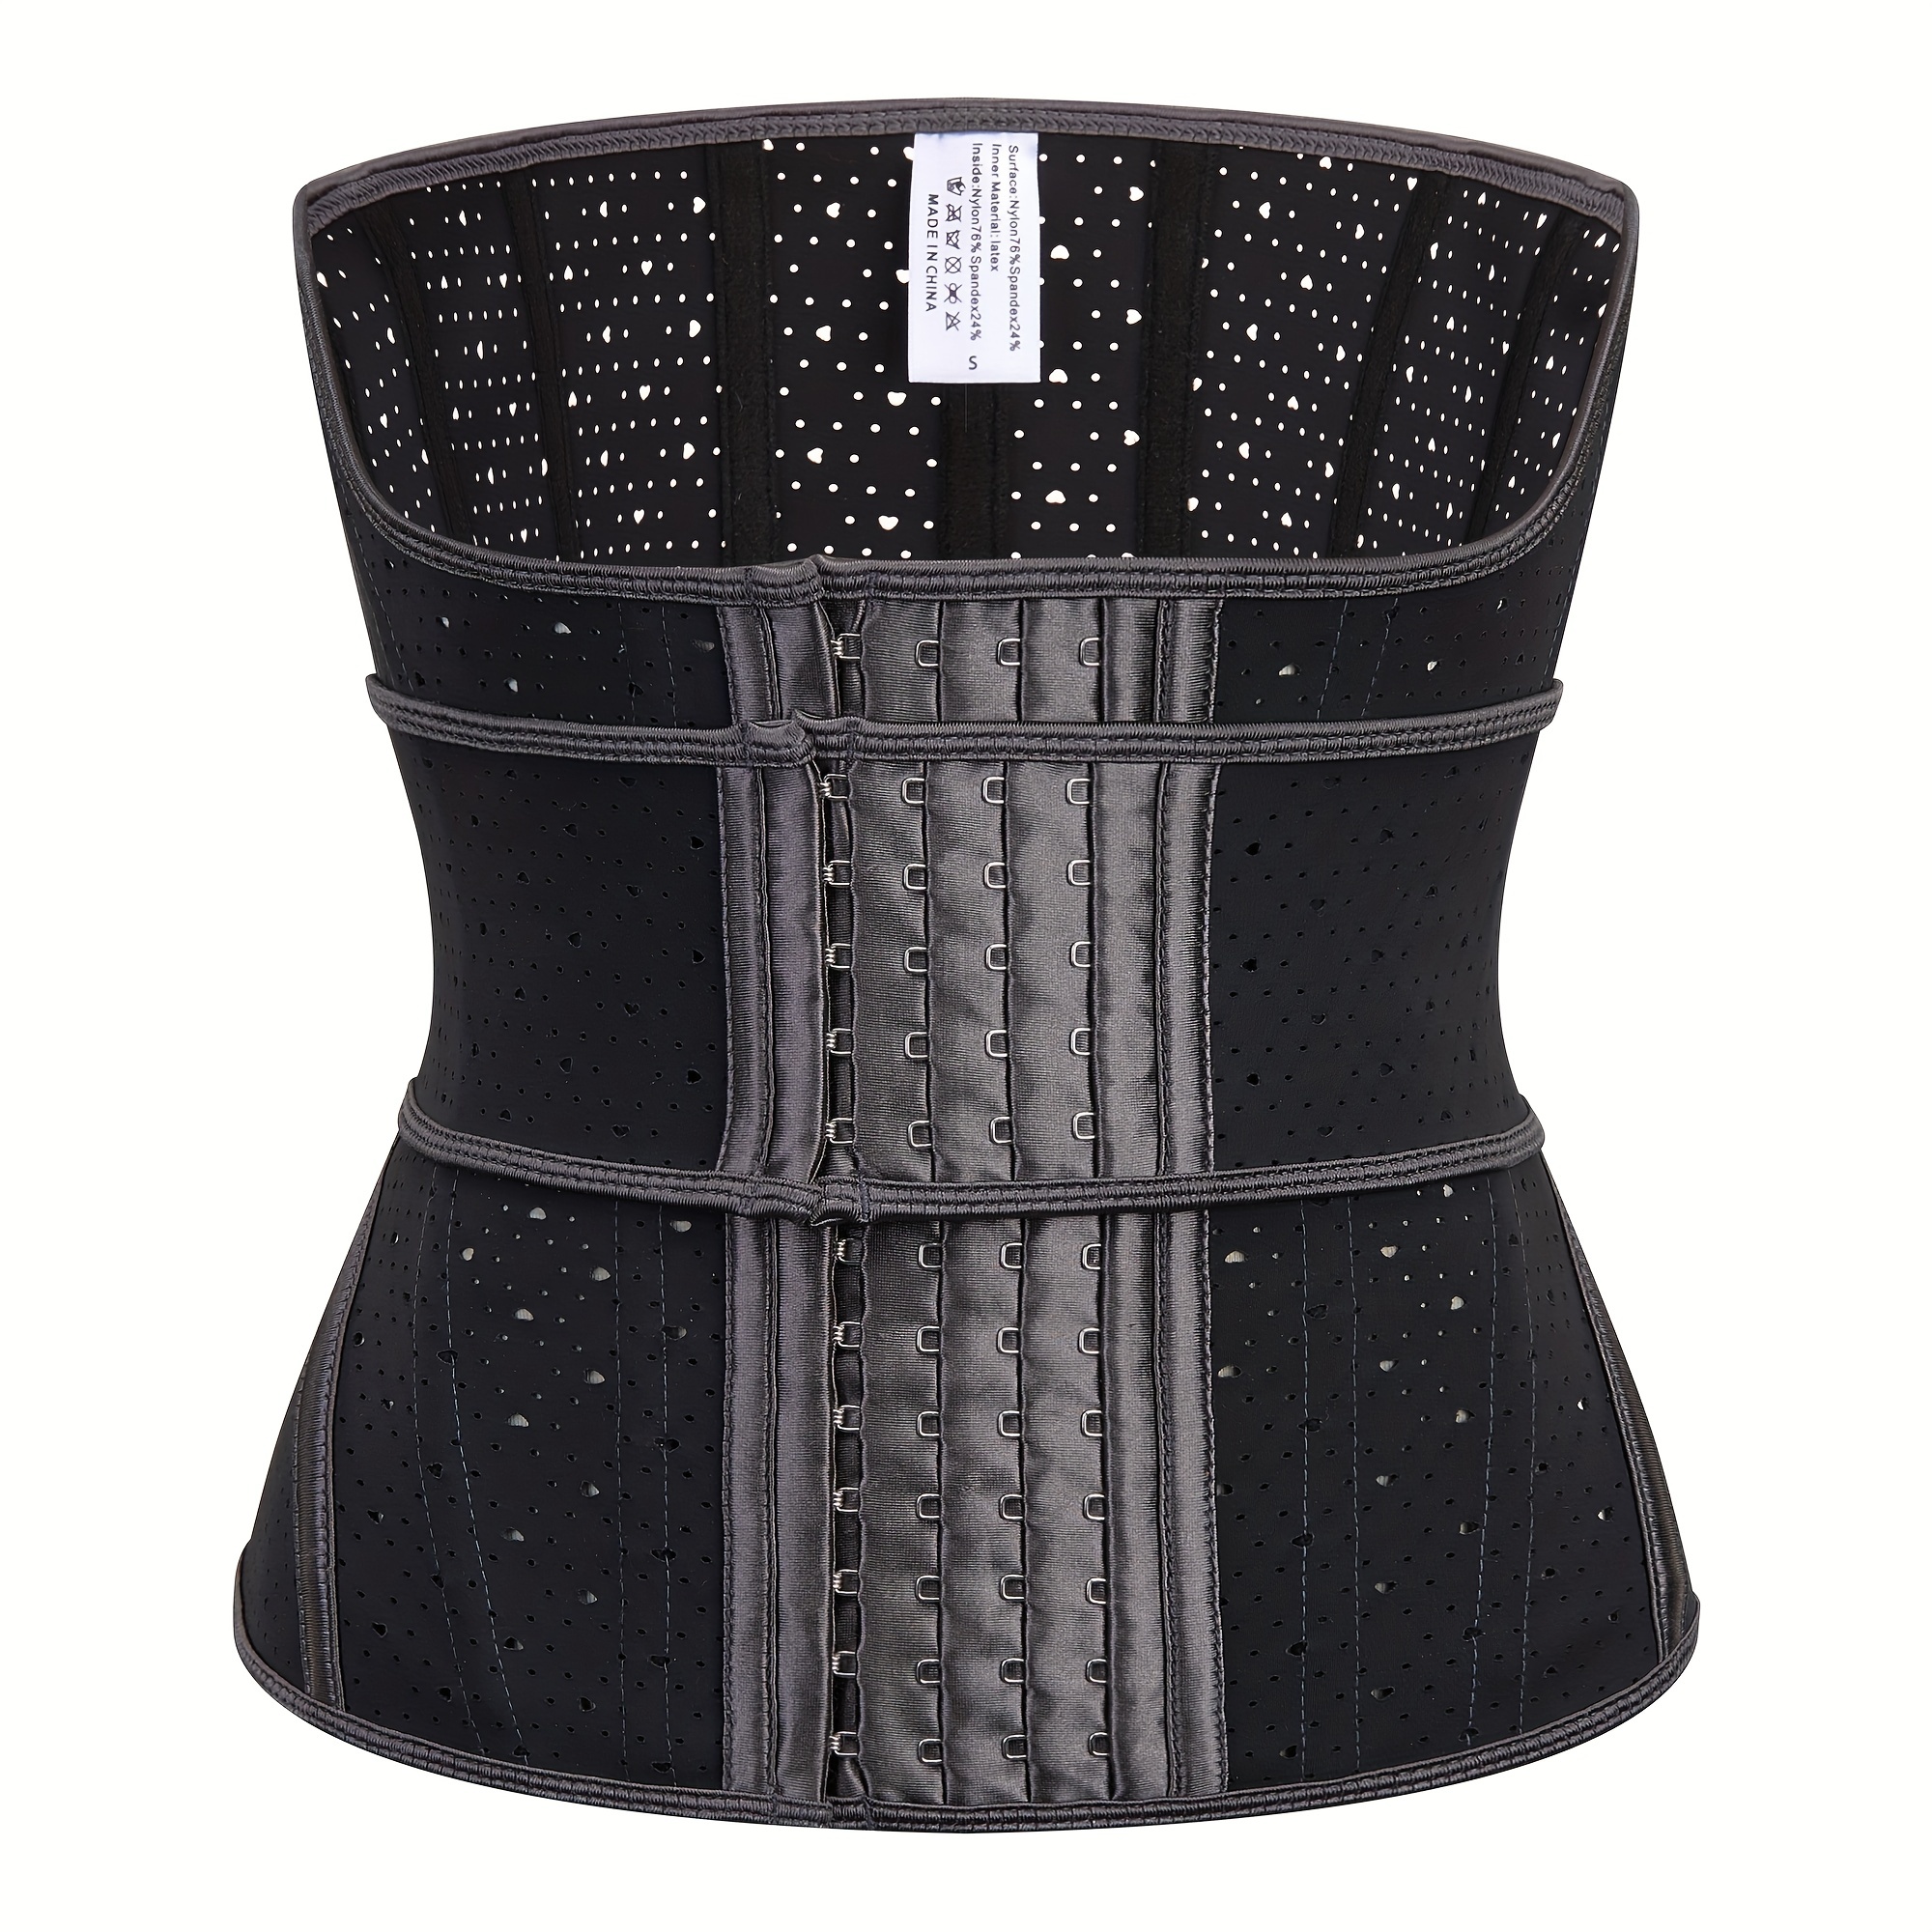 Women Waist Trainer Corset Belt: Under Clothes Sport Tummy Control Long  Torso Shapewear